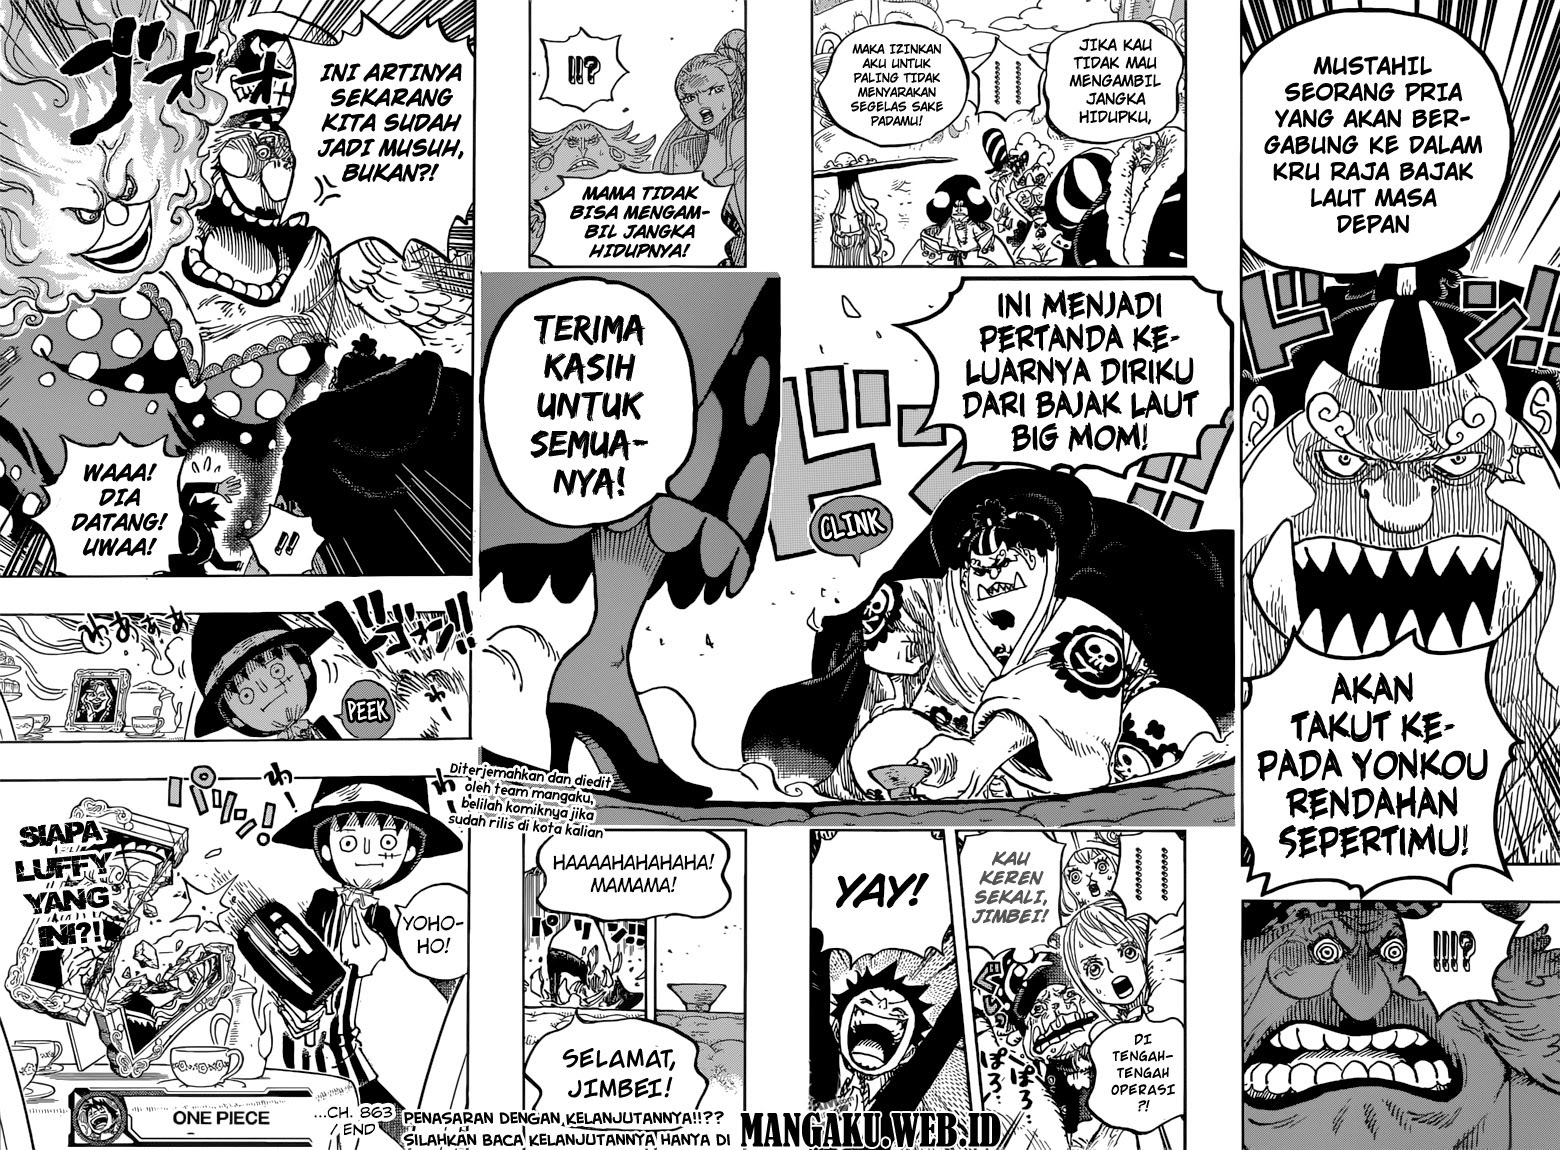 One Piece Chapter 863 – Pria Penipu - 143